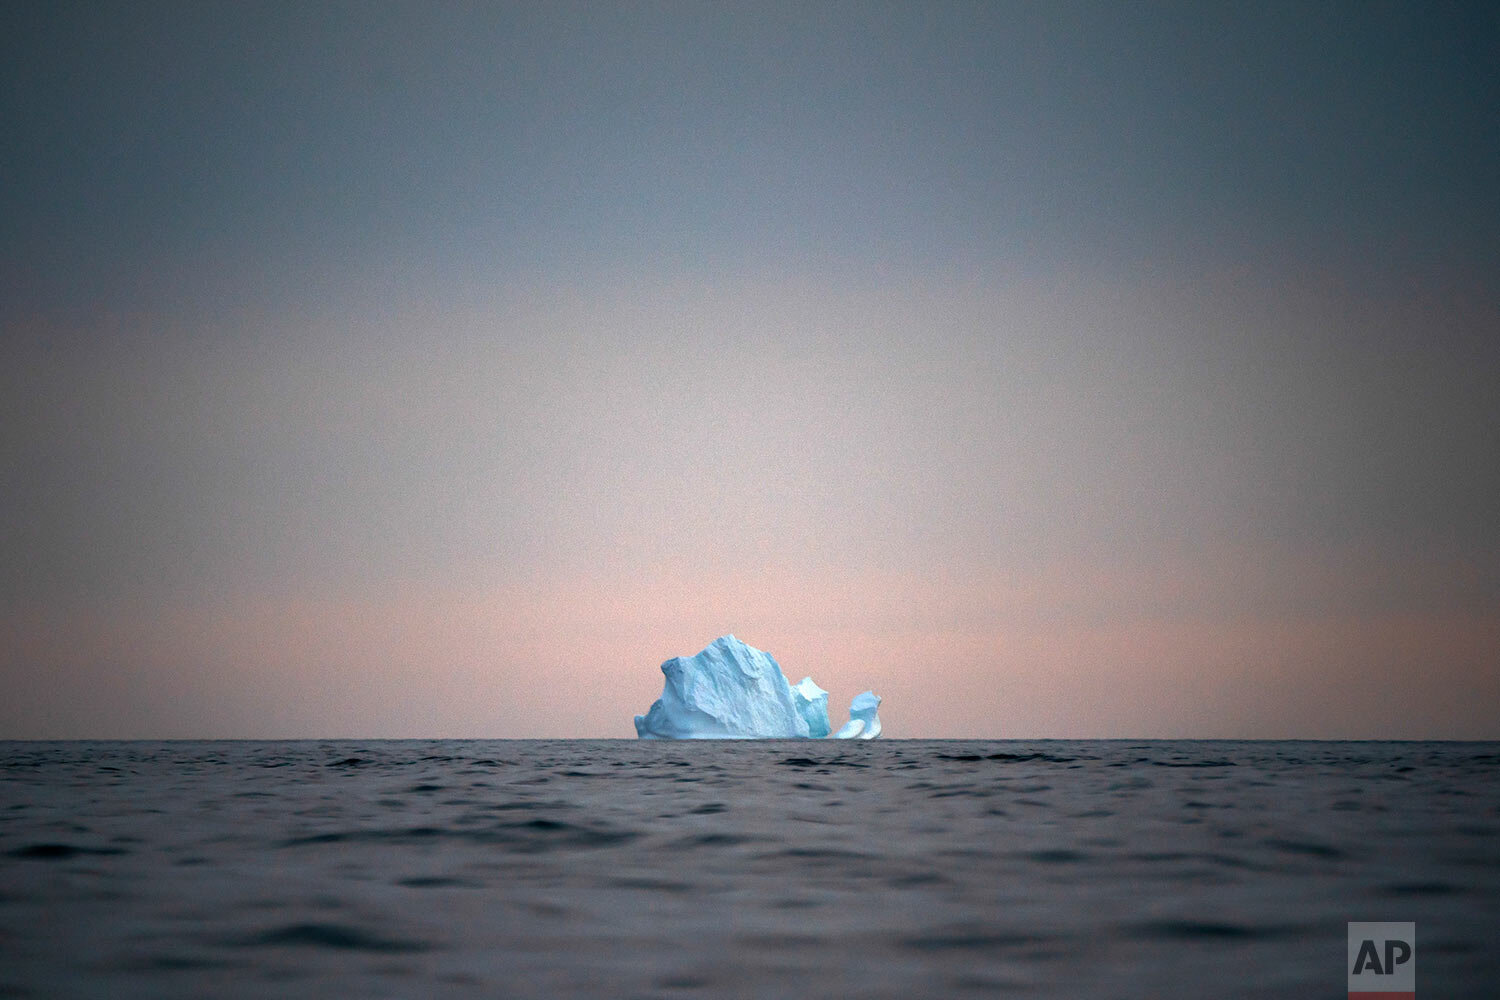  A large Iceberg floats away as the sun sets near Kulusuk, Greenland, on Aug. 15, 2019. (AP Photo/Felipe Dana) 